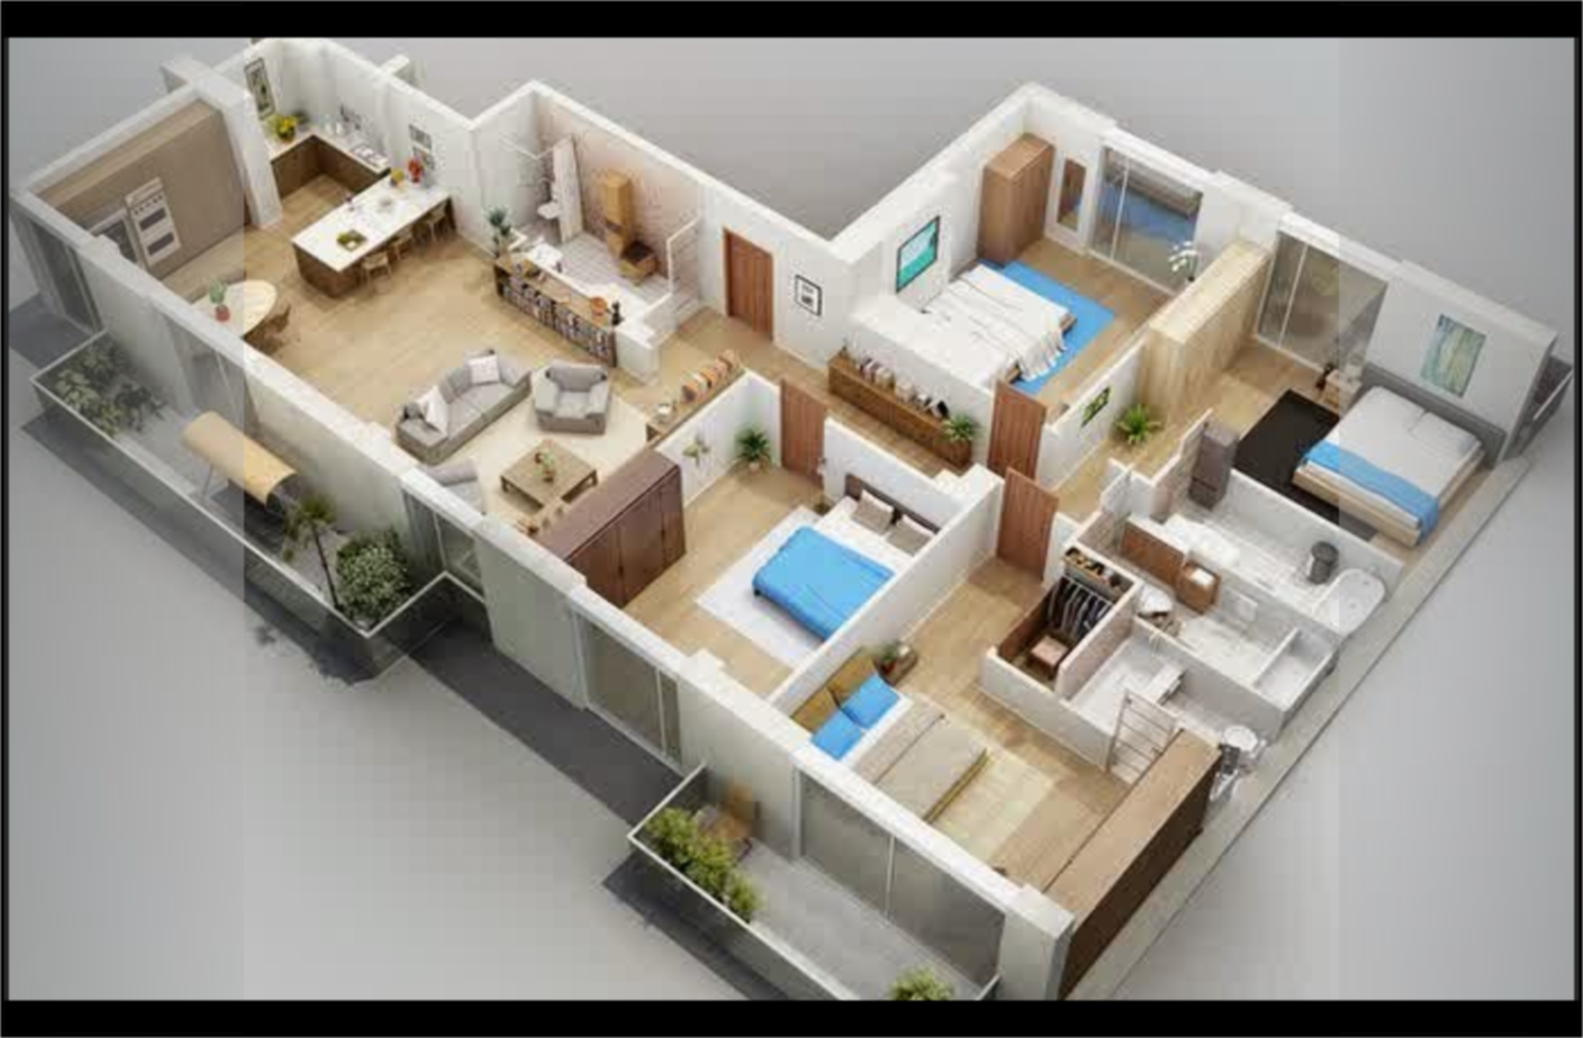 Two bedroom flat. Проект квартиры. Проектировка квартиры. Красивые планировки квартир. Современные планировки квартир.